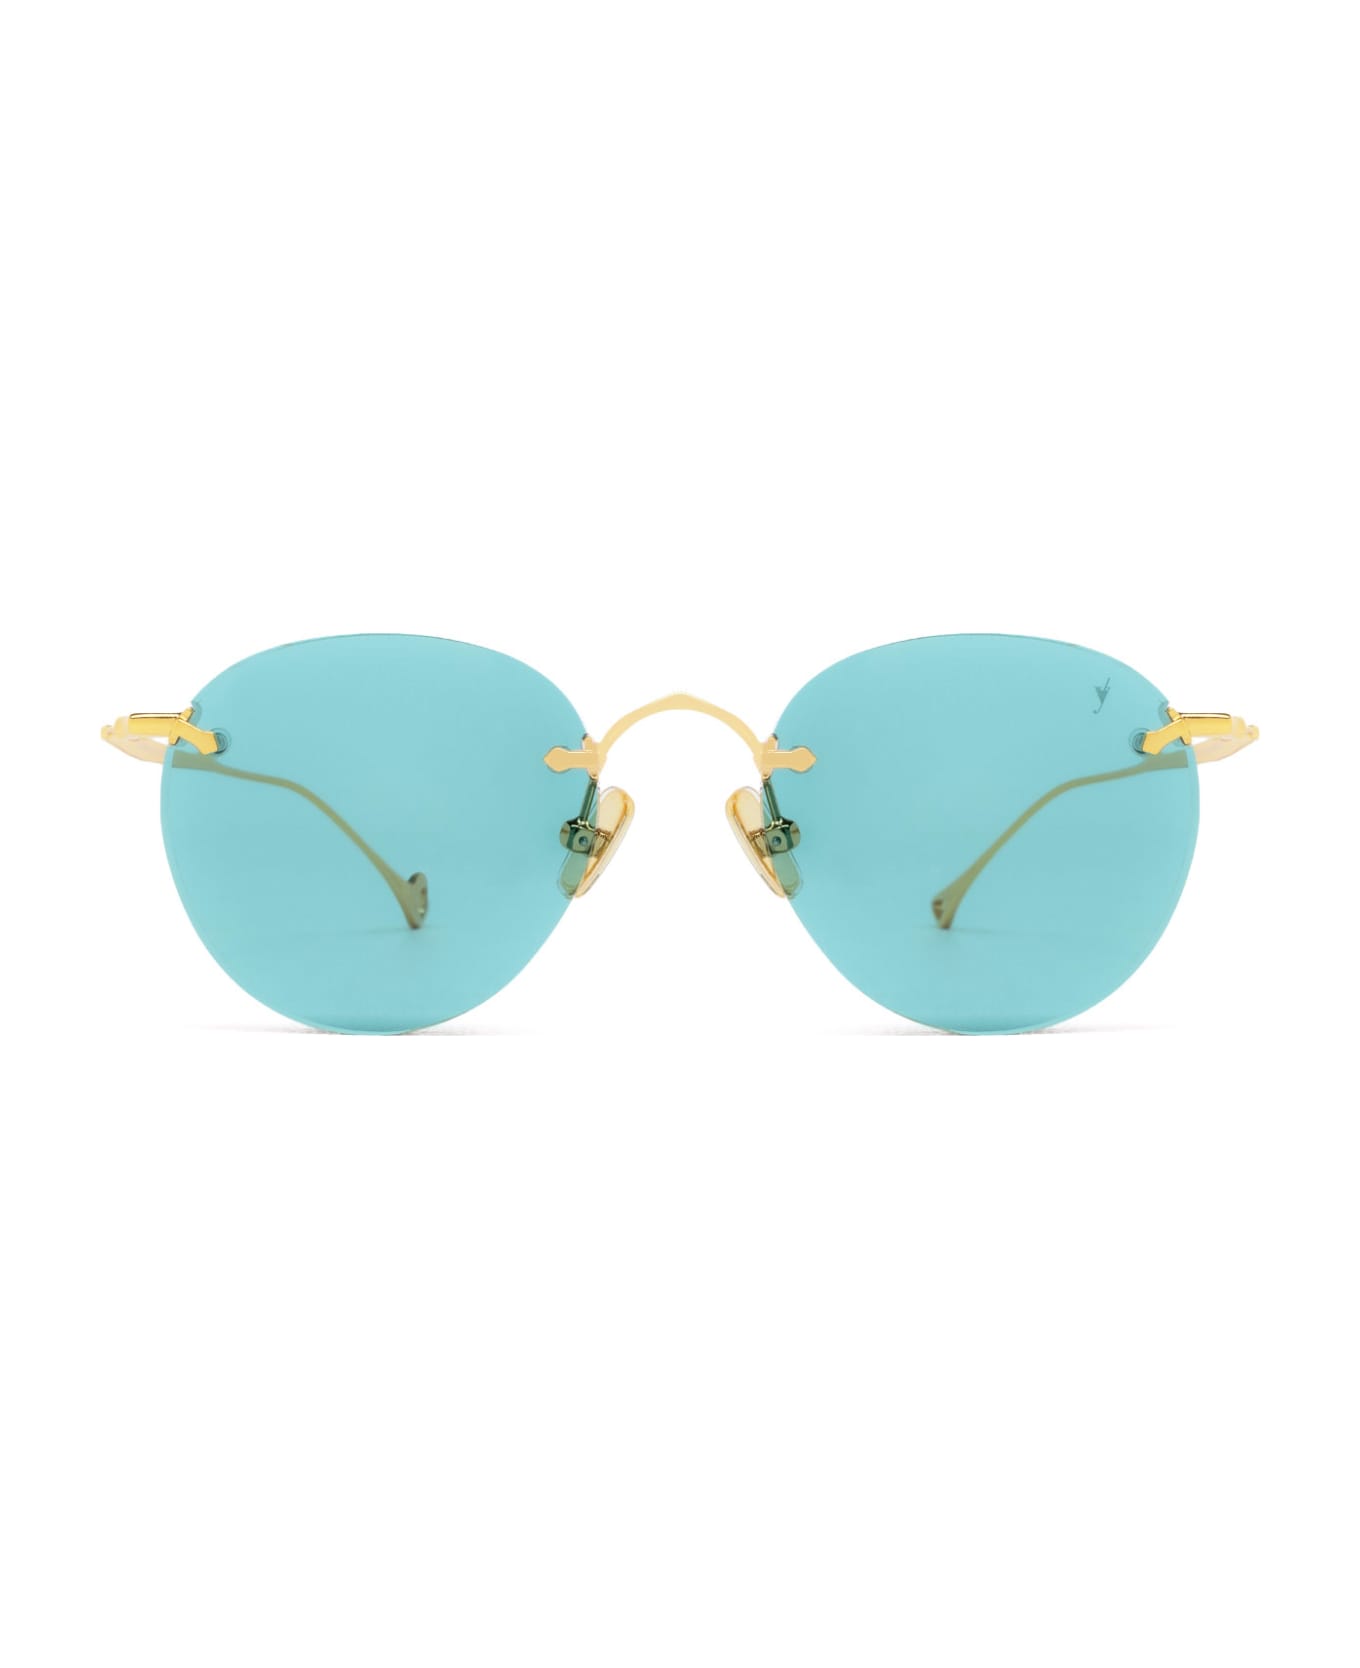 Eyepetizer Oxford Gold Sunglasses - Gold